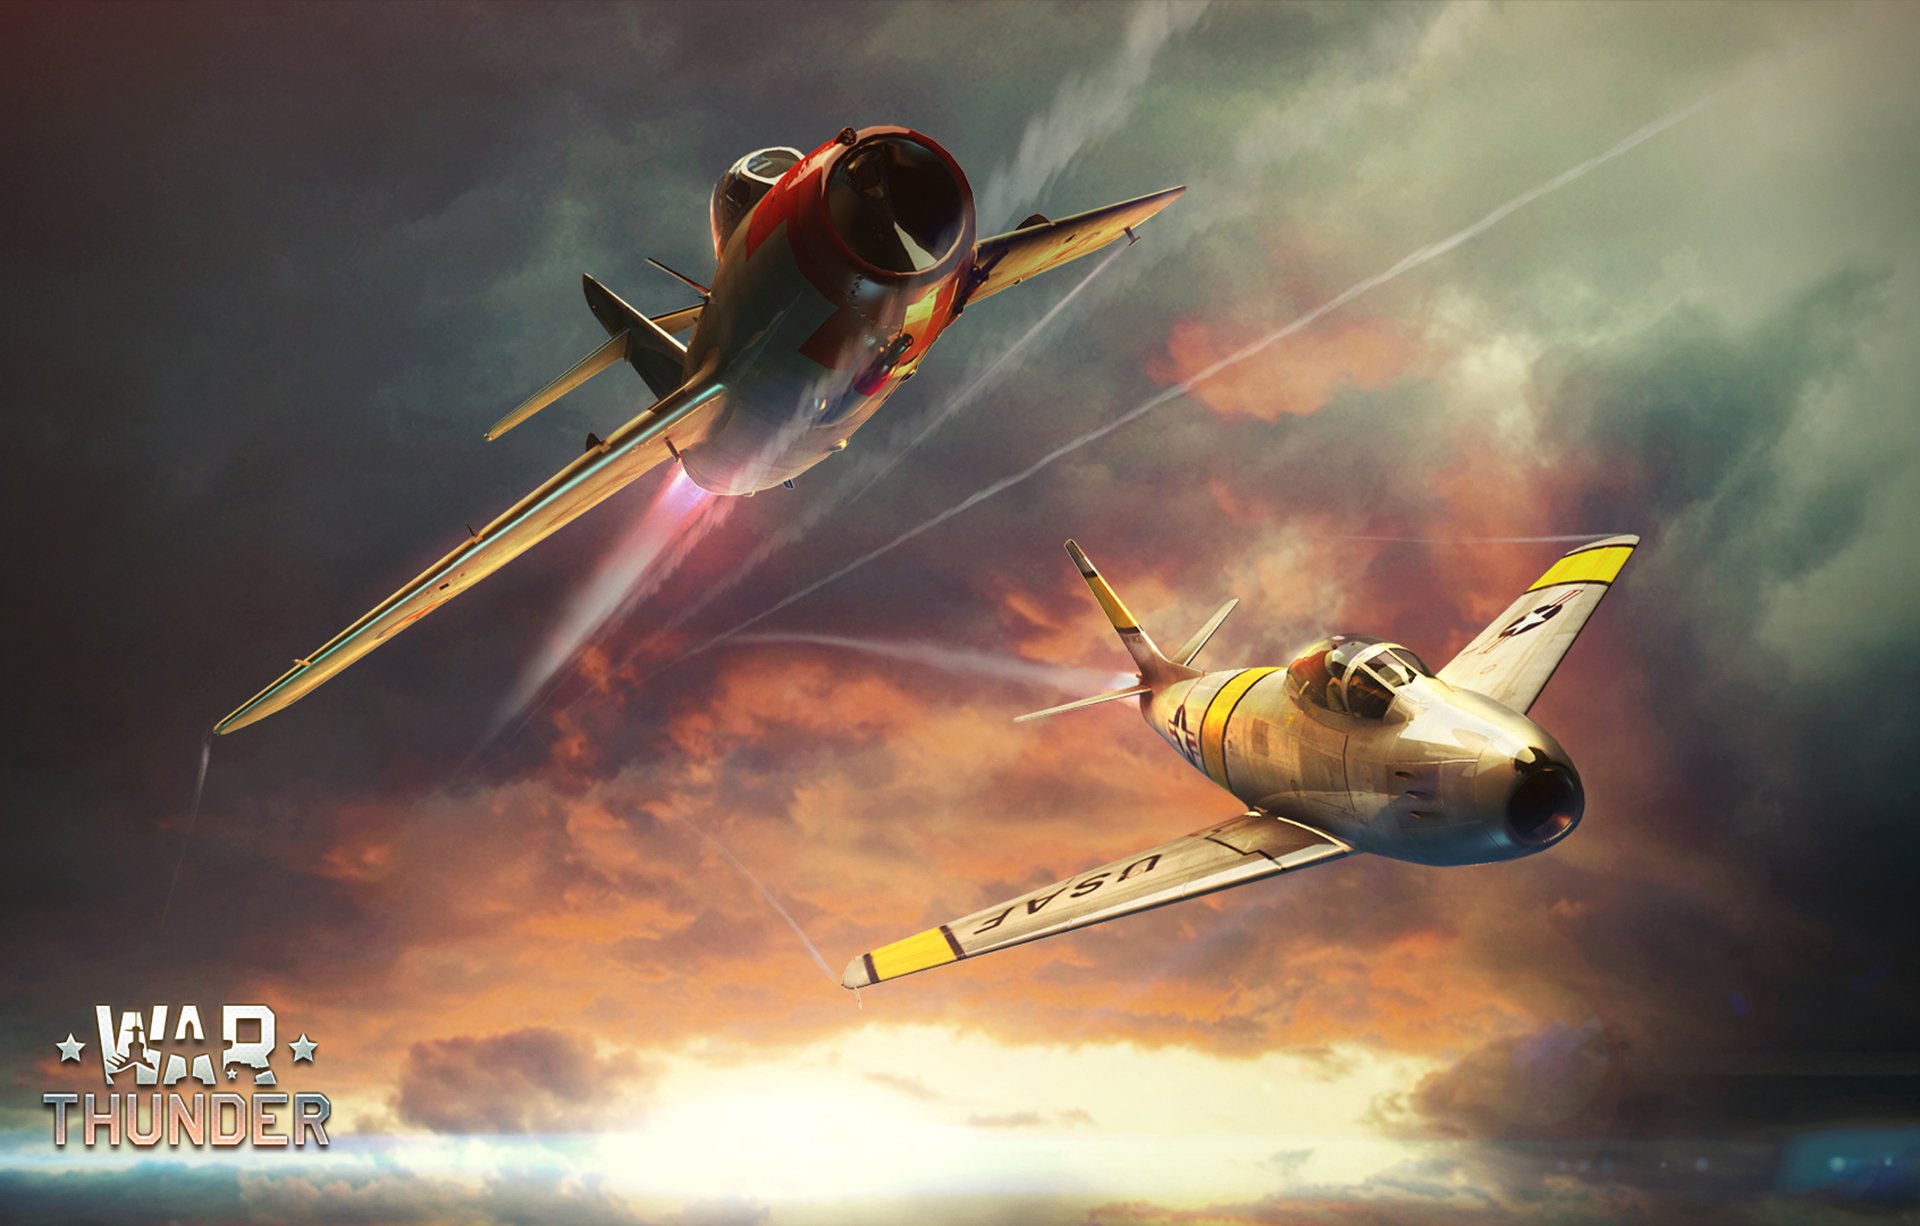 air battle of skye ww2 online game free download